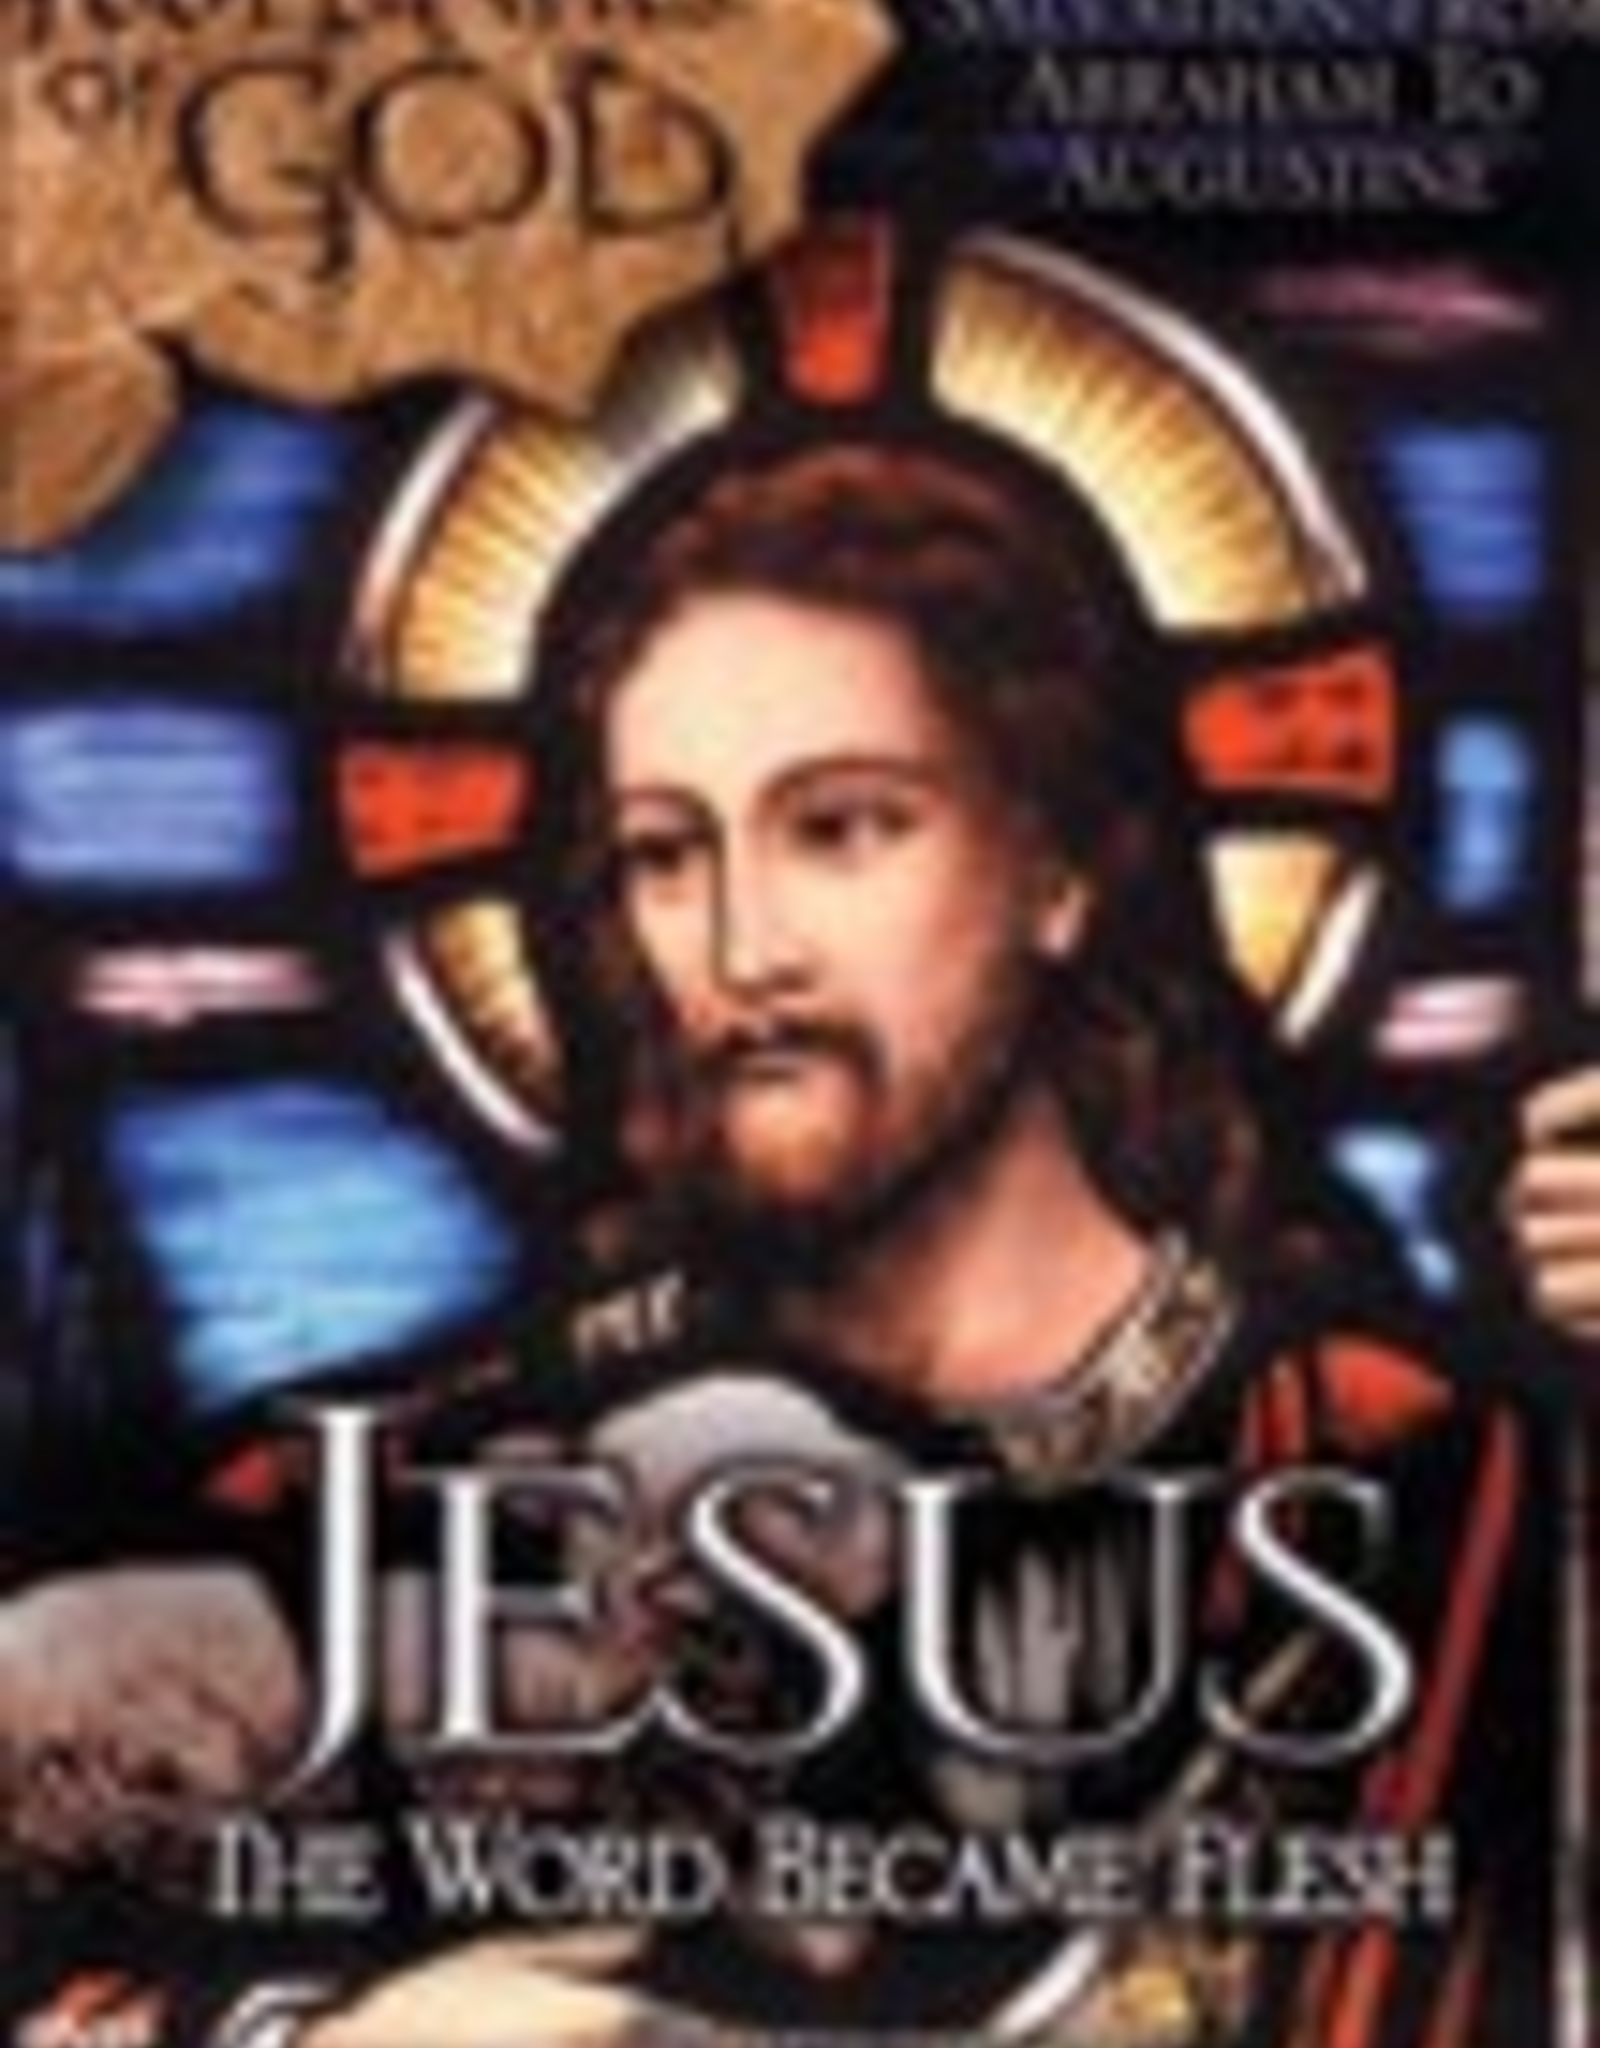 Ignatius Press Footprints of God:  Jesus (DVD)